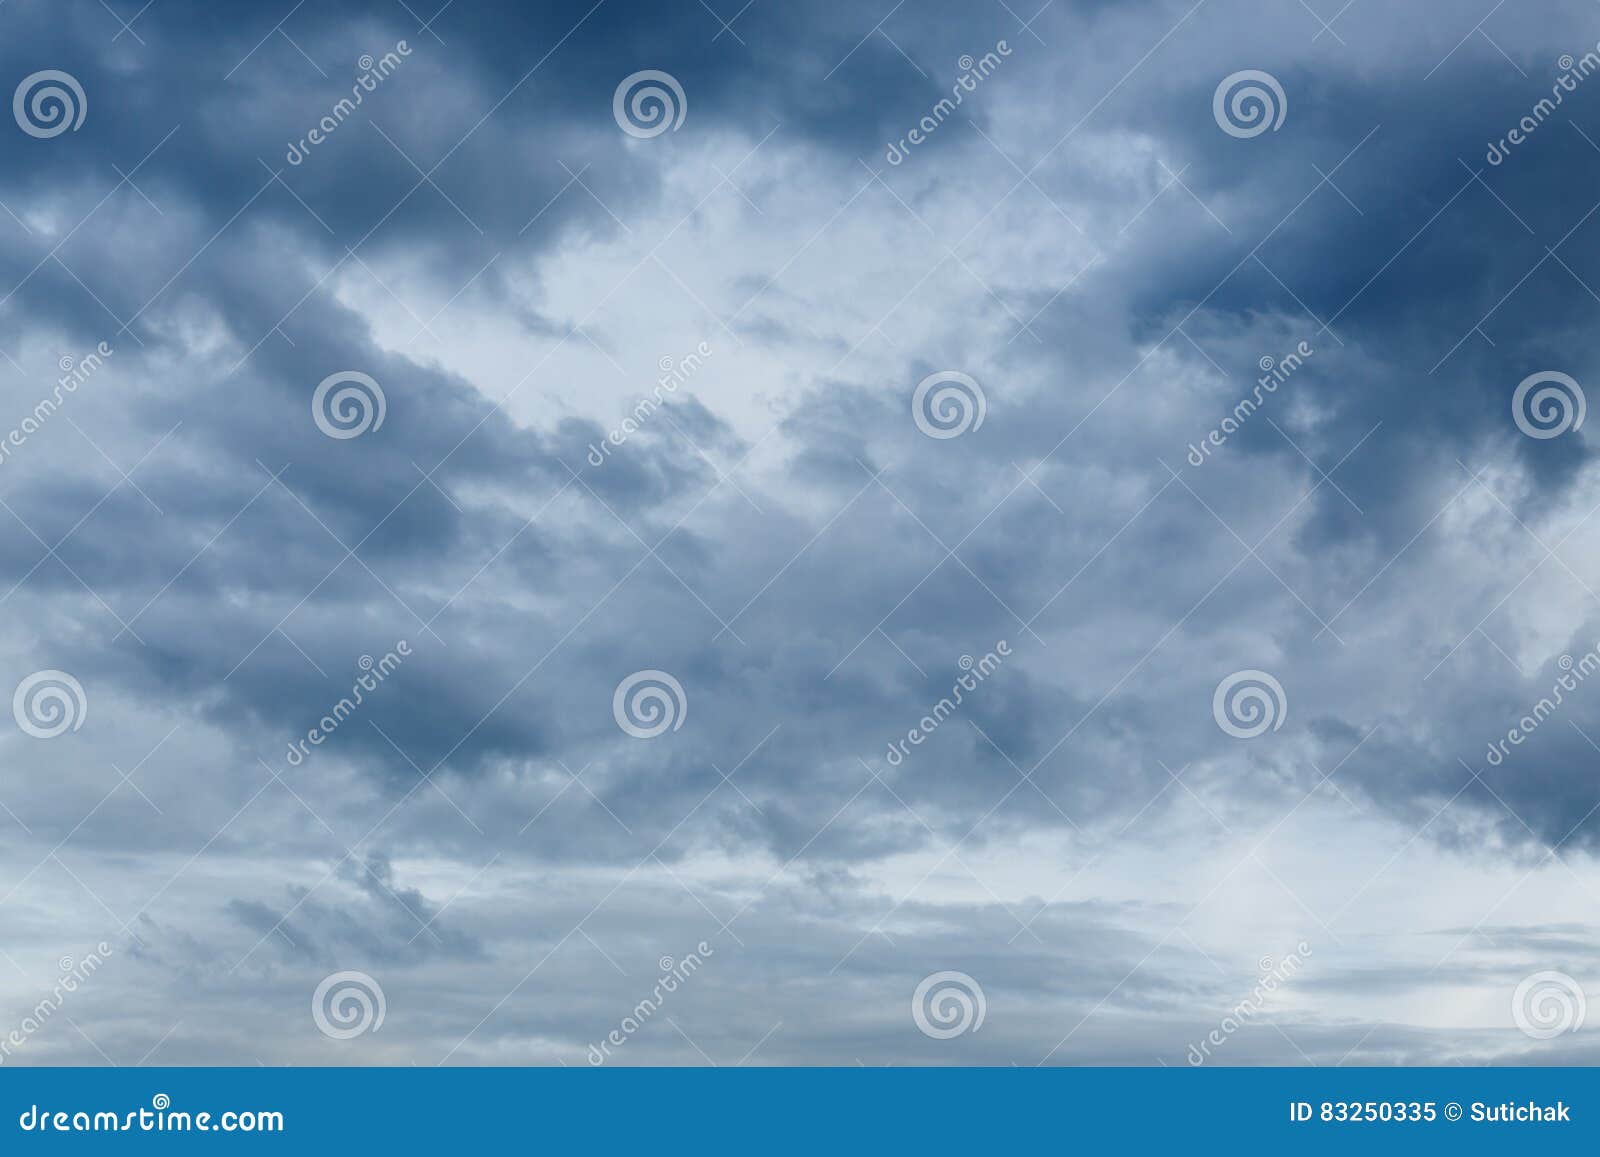 Rain Cloud Dramatic Moody Sky Background Stock Image - Image of  destruction, heavy: 83250335